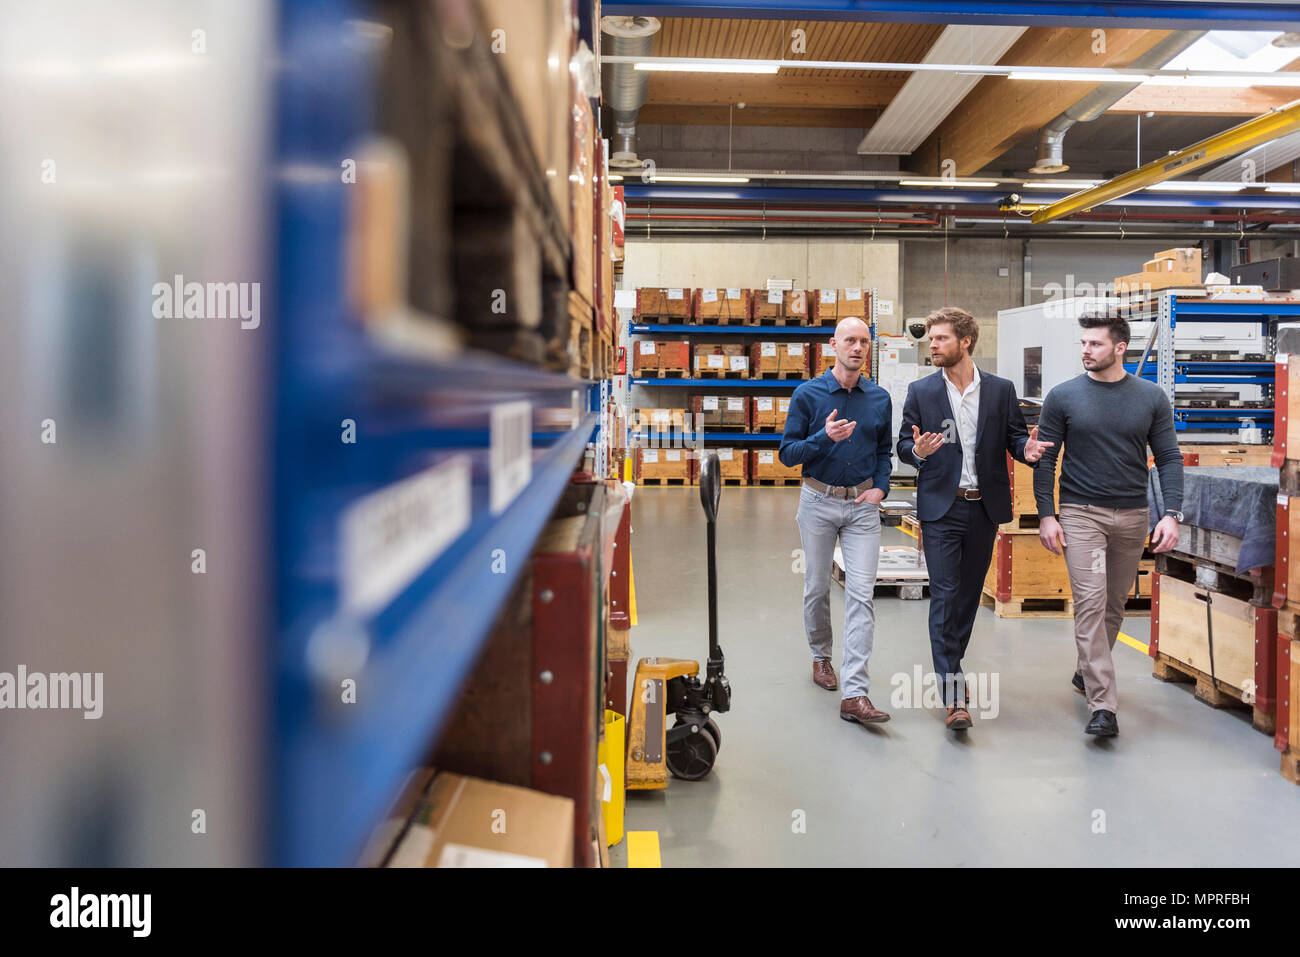 Three men walking and talking in factory storeroom Stock Photo